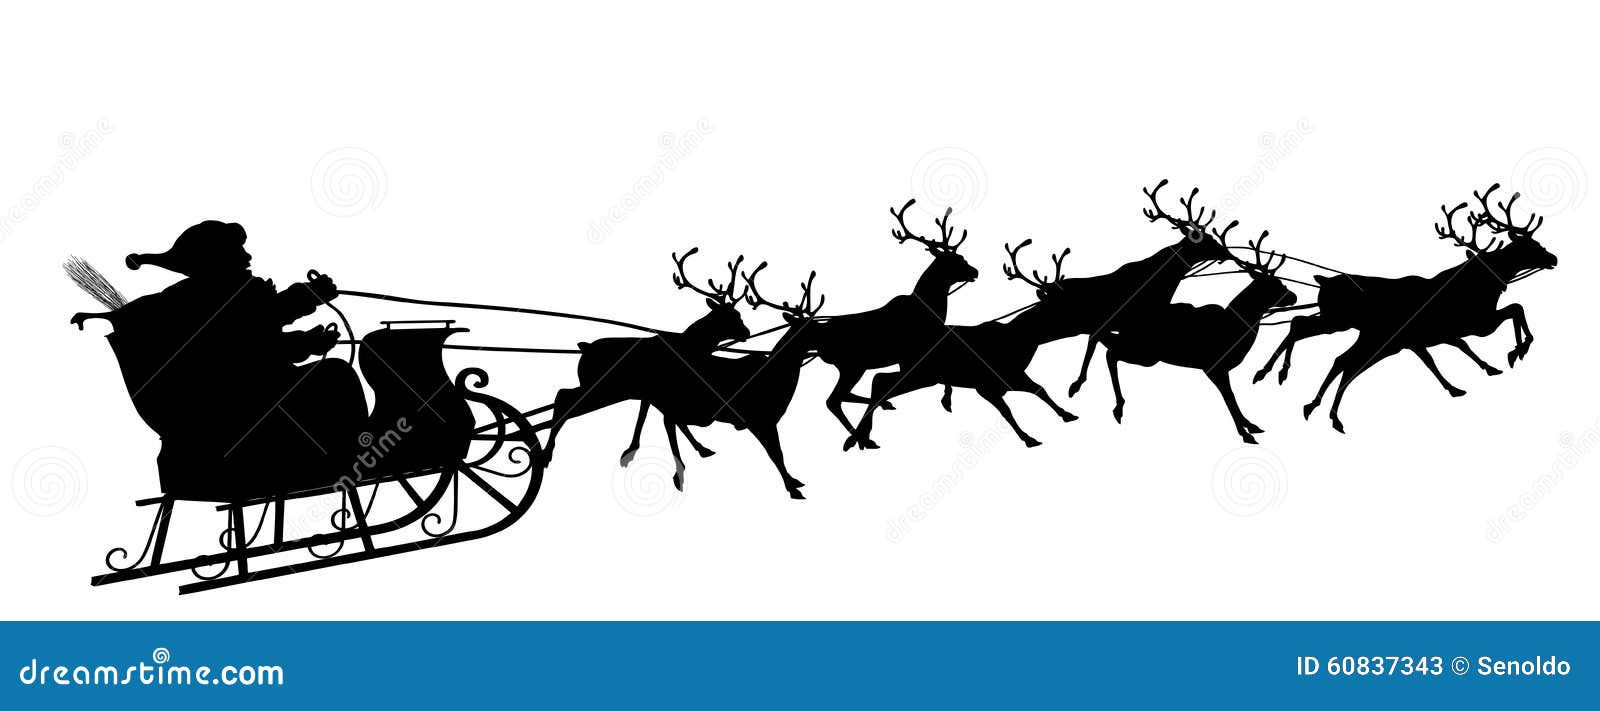 santa claus with reindeer sleigh  - black silhouette